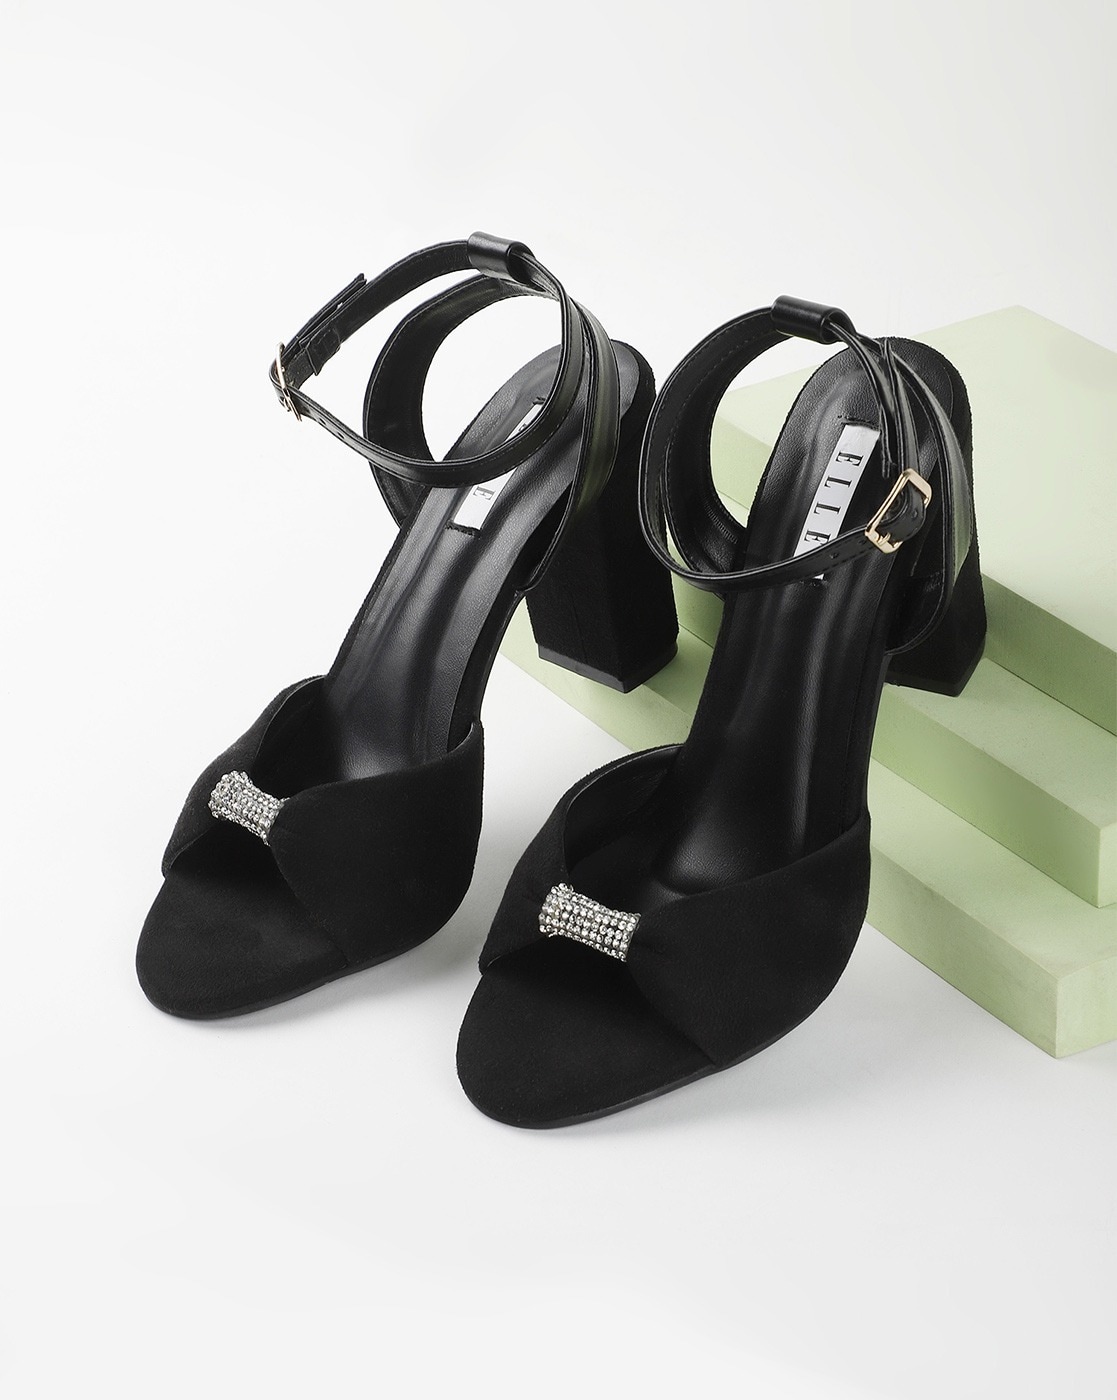 Aribaa Black Lace-Up High Heel Sandals | Sandals heels, High heel sandals,  Lace up high heels